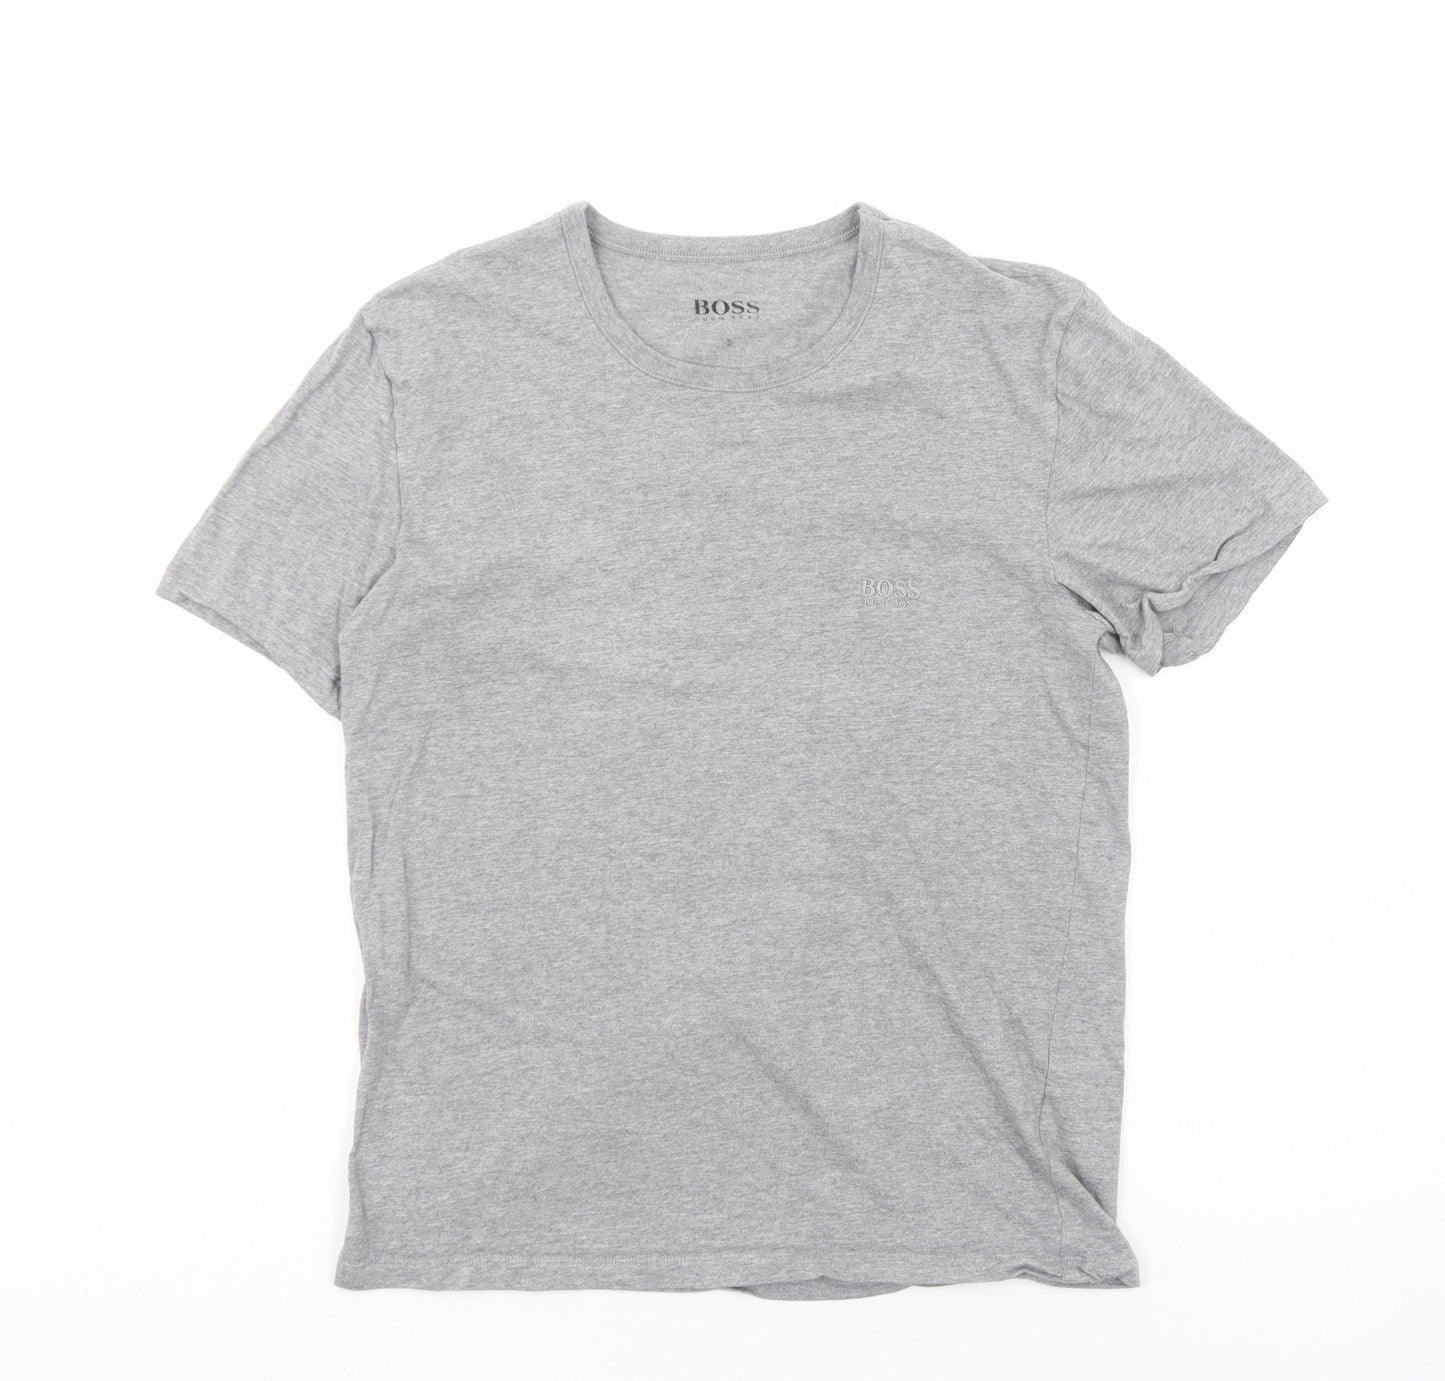 HUGO BOSS Mens Grey Viscose T-Shirt Size S Round Neck